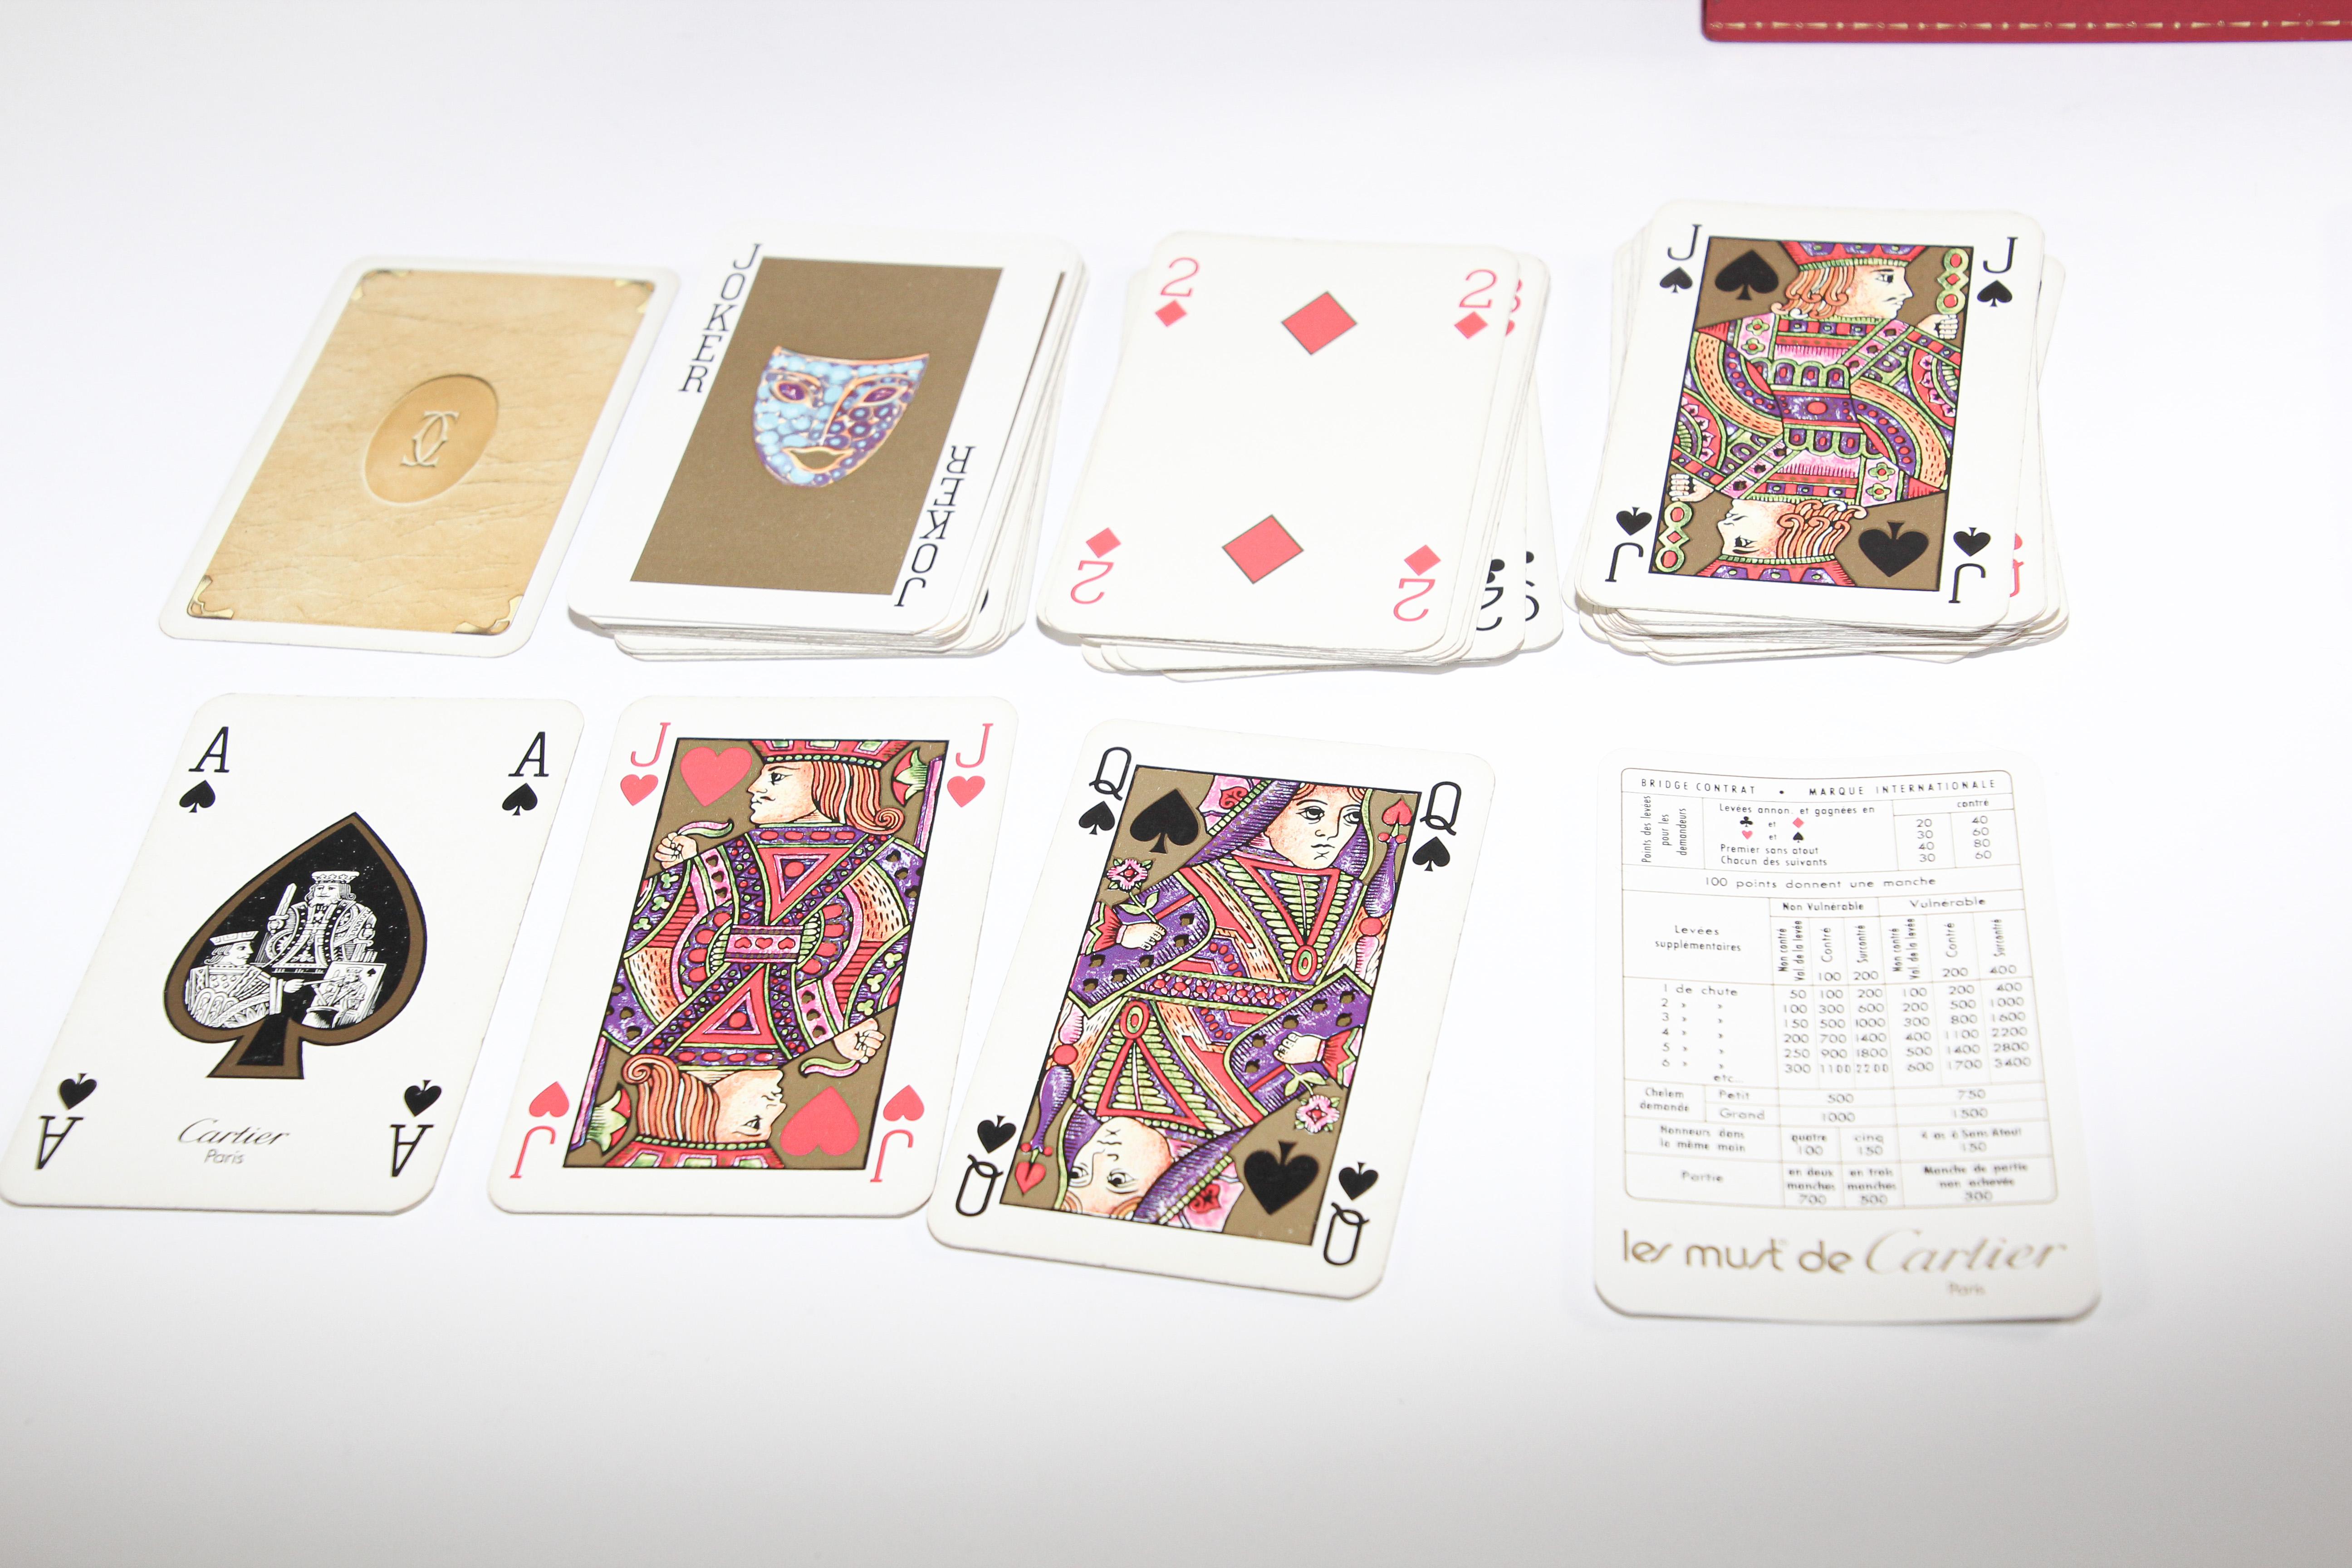 Paper Must De Cartier Paris Vintage Playing Poker or Bridge Cards in Red Original Box